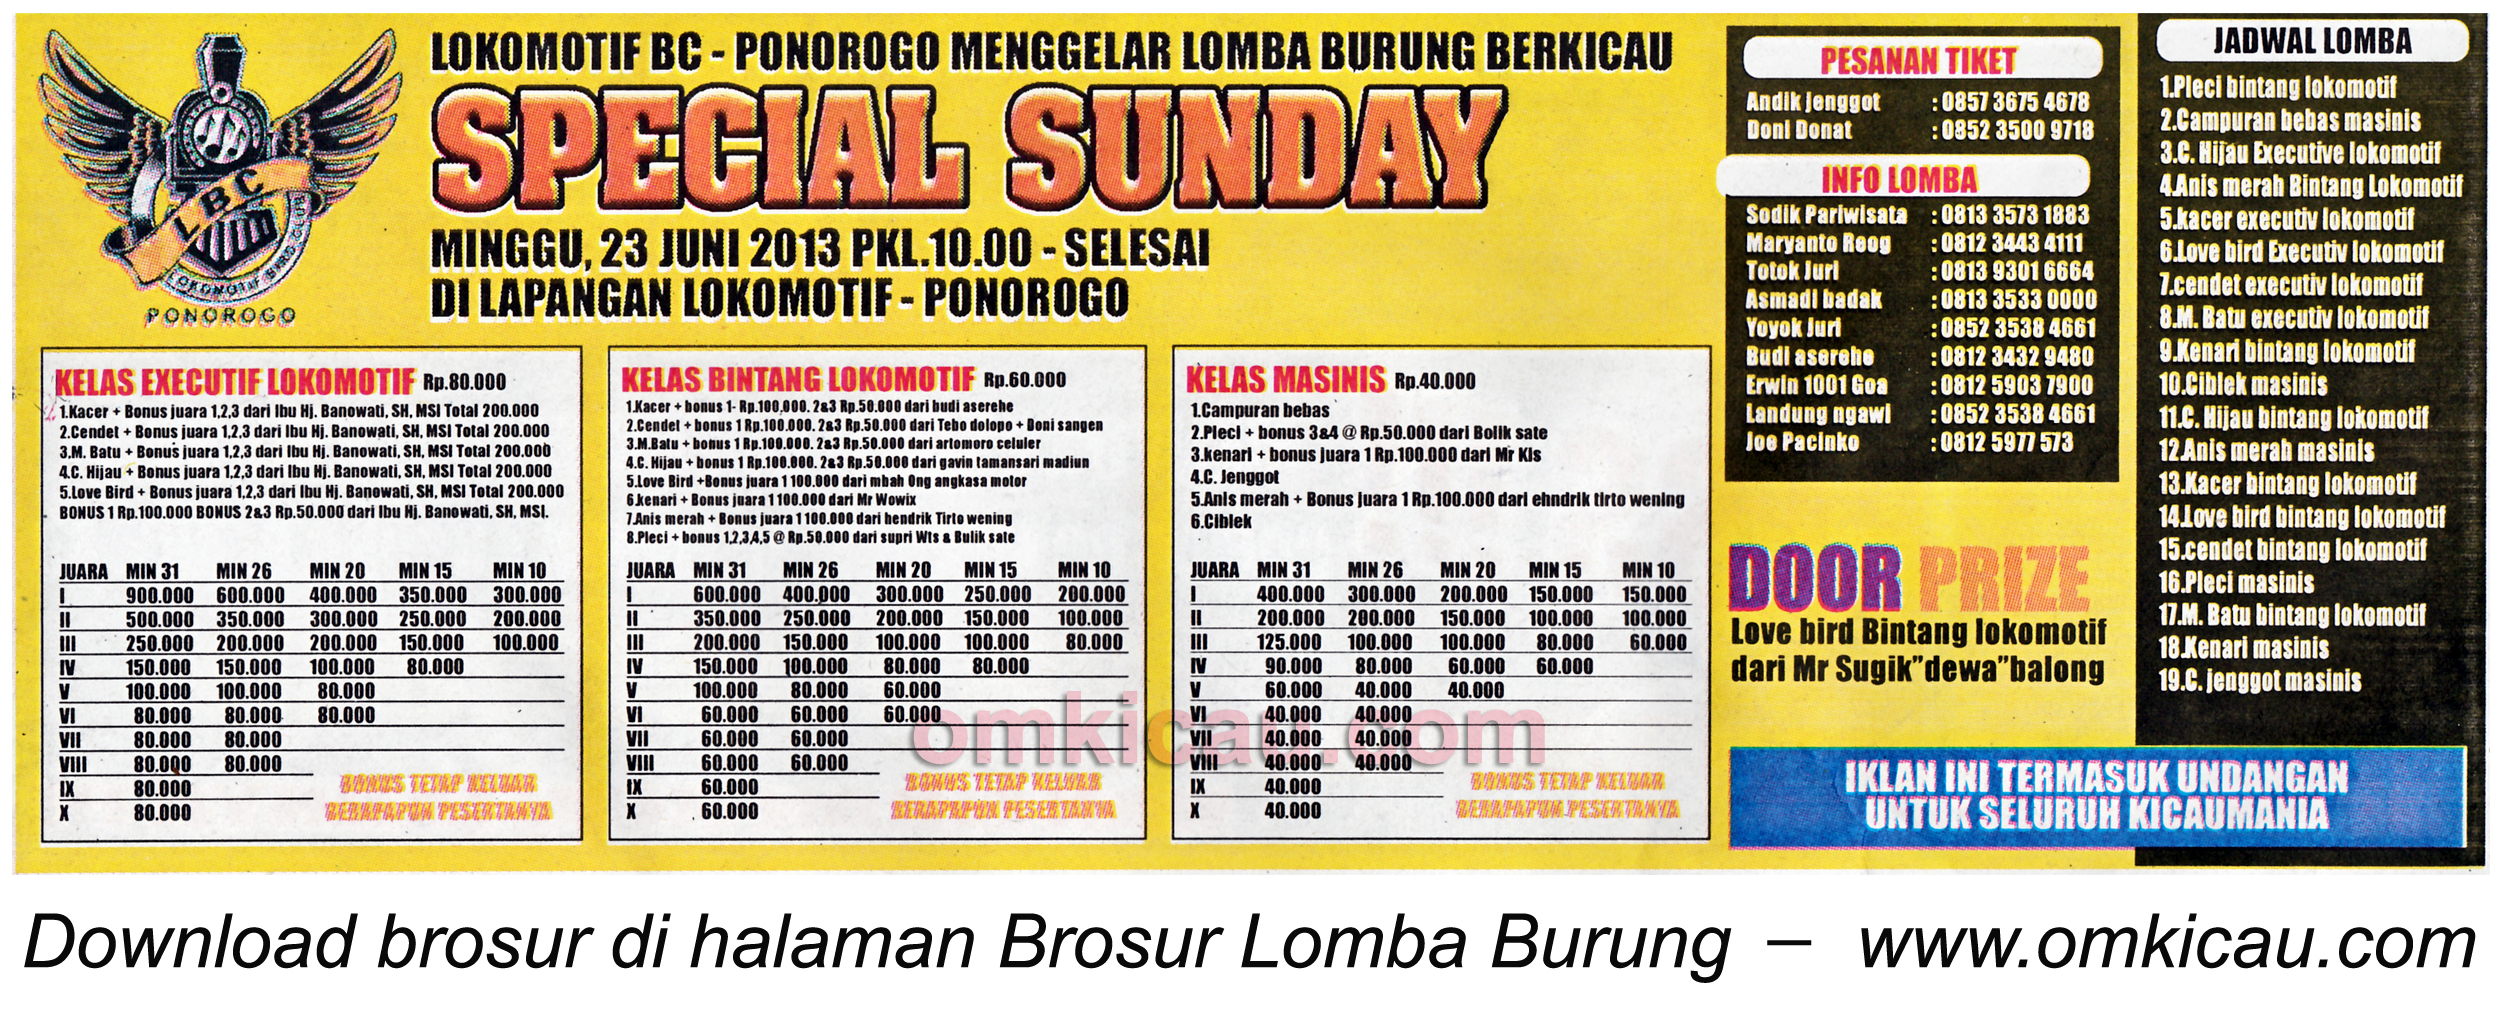 Brosur Lomba Special Sunday Lokomotif BC Ponorogo 23 Juni 2013